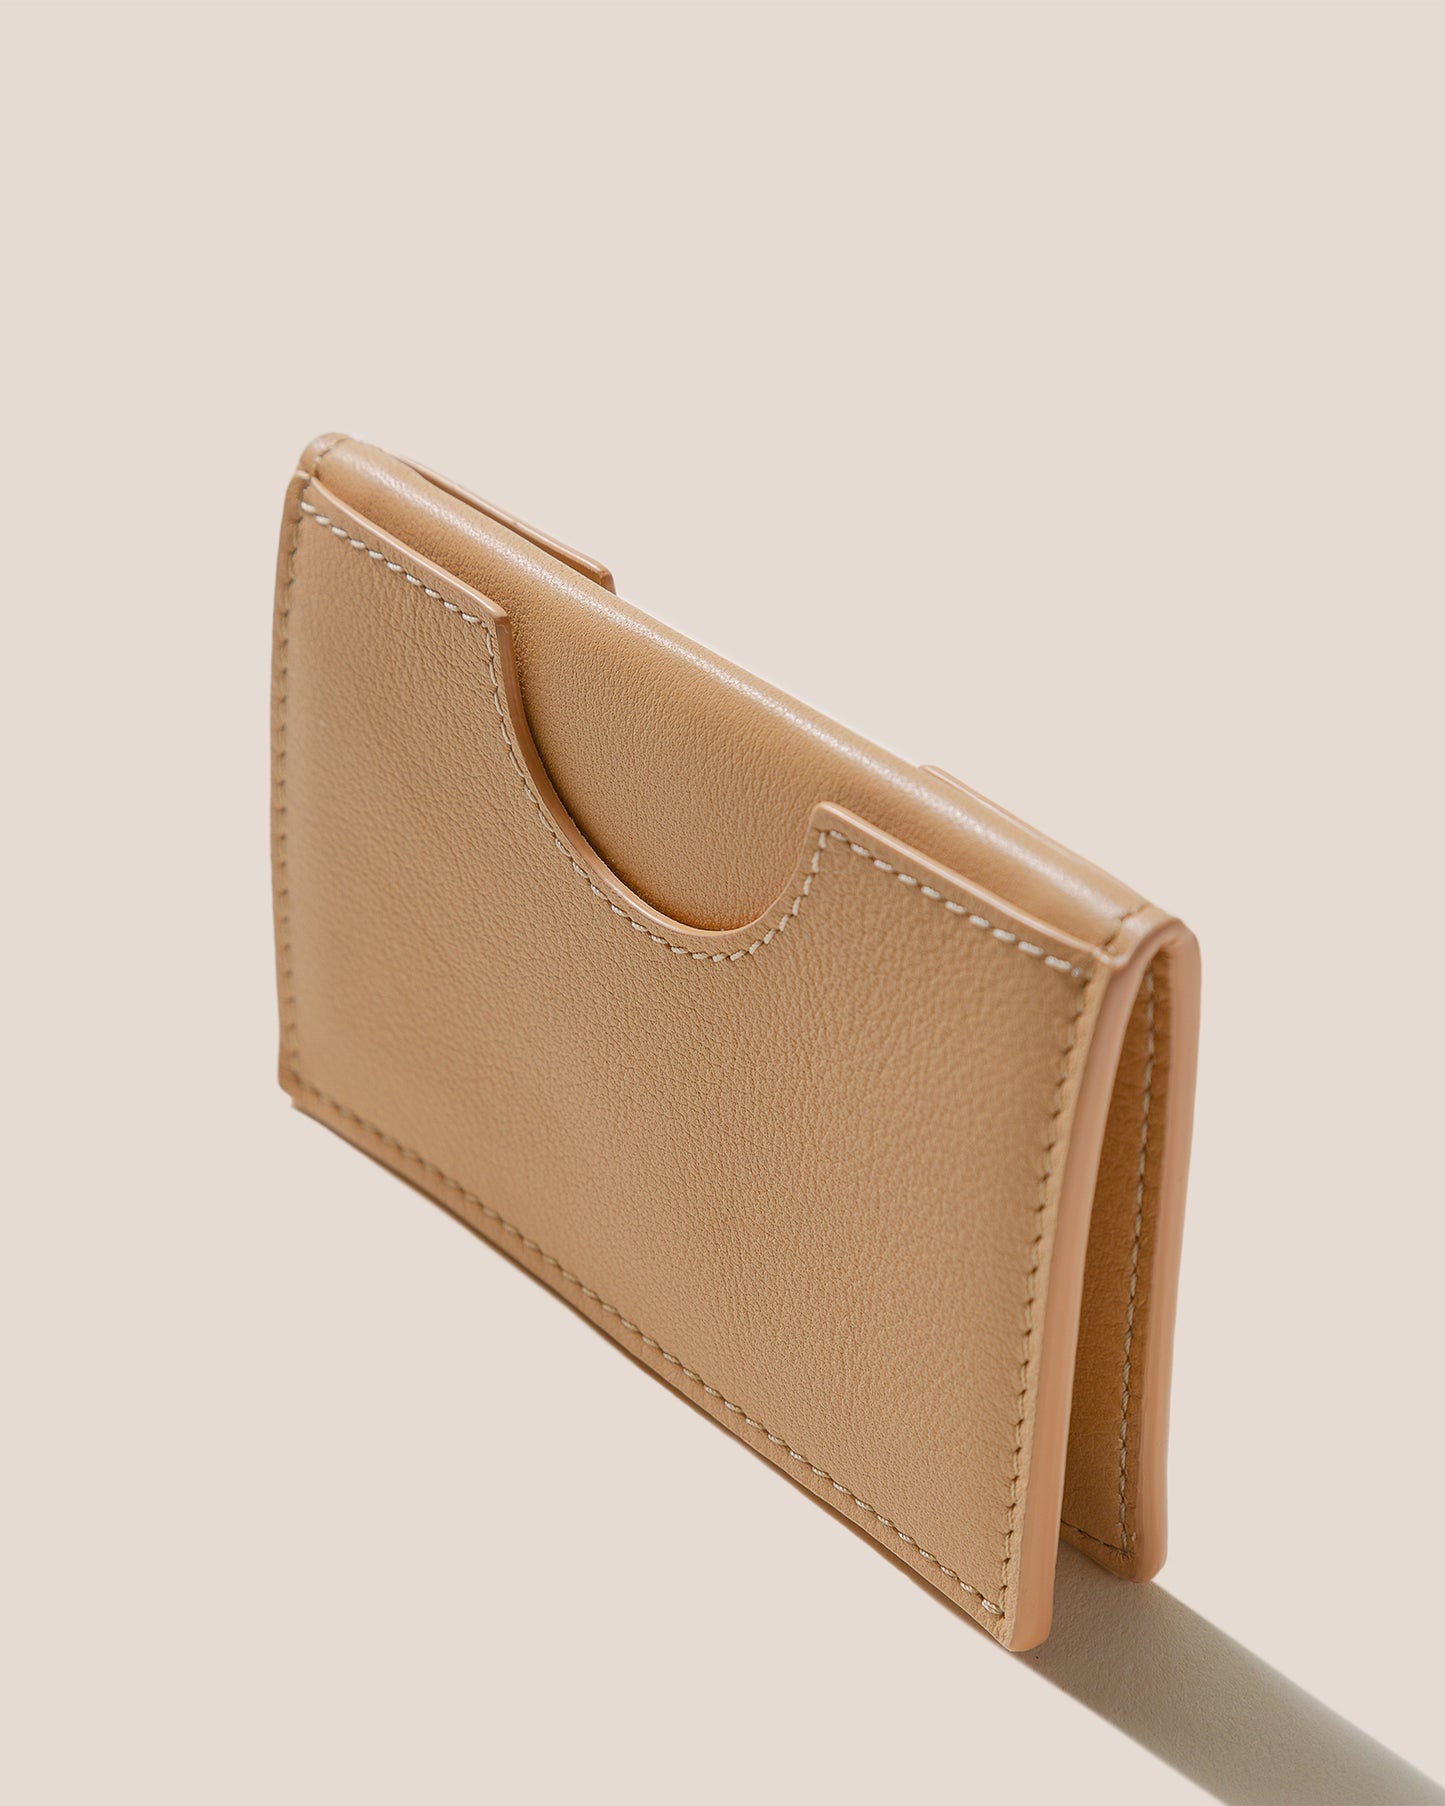 RODONA - Foldable Leather Card Holder